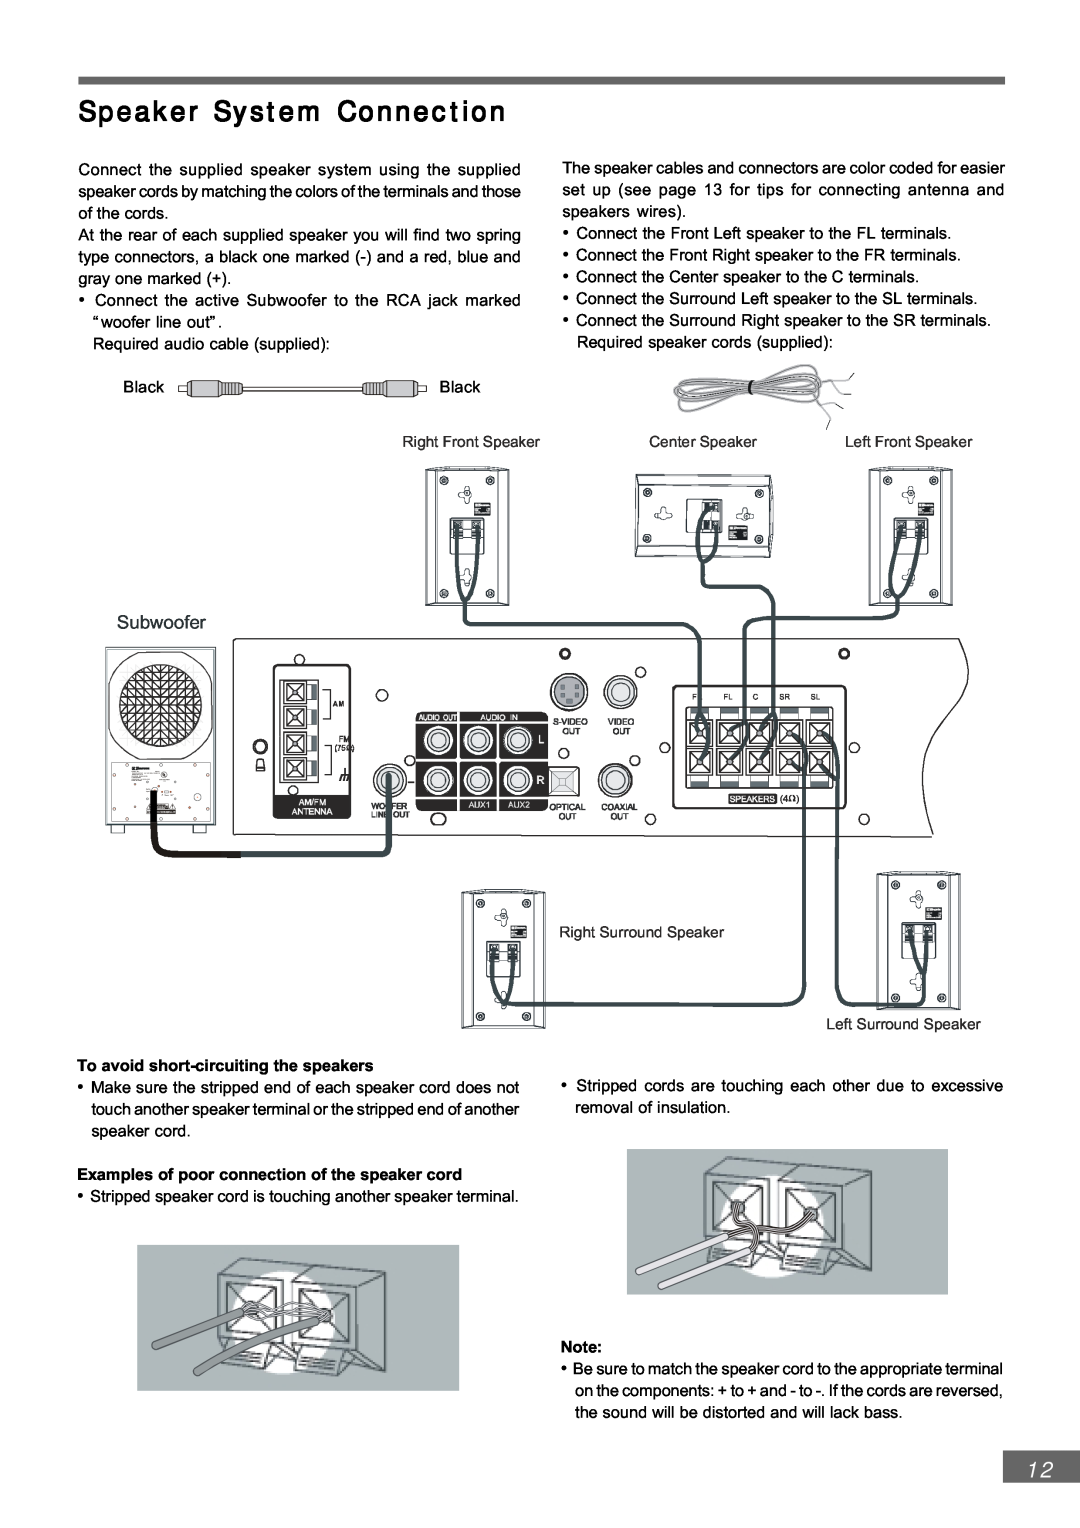 Emerson AV301 owner manual Speaker System Connection, Subwoofer 